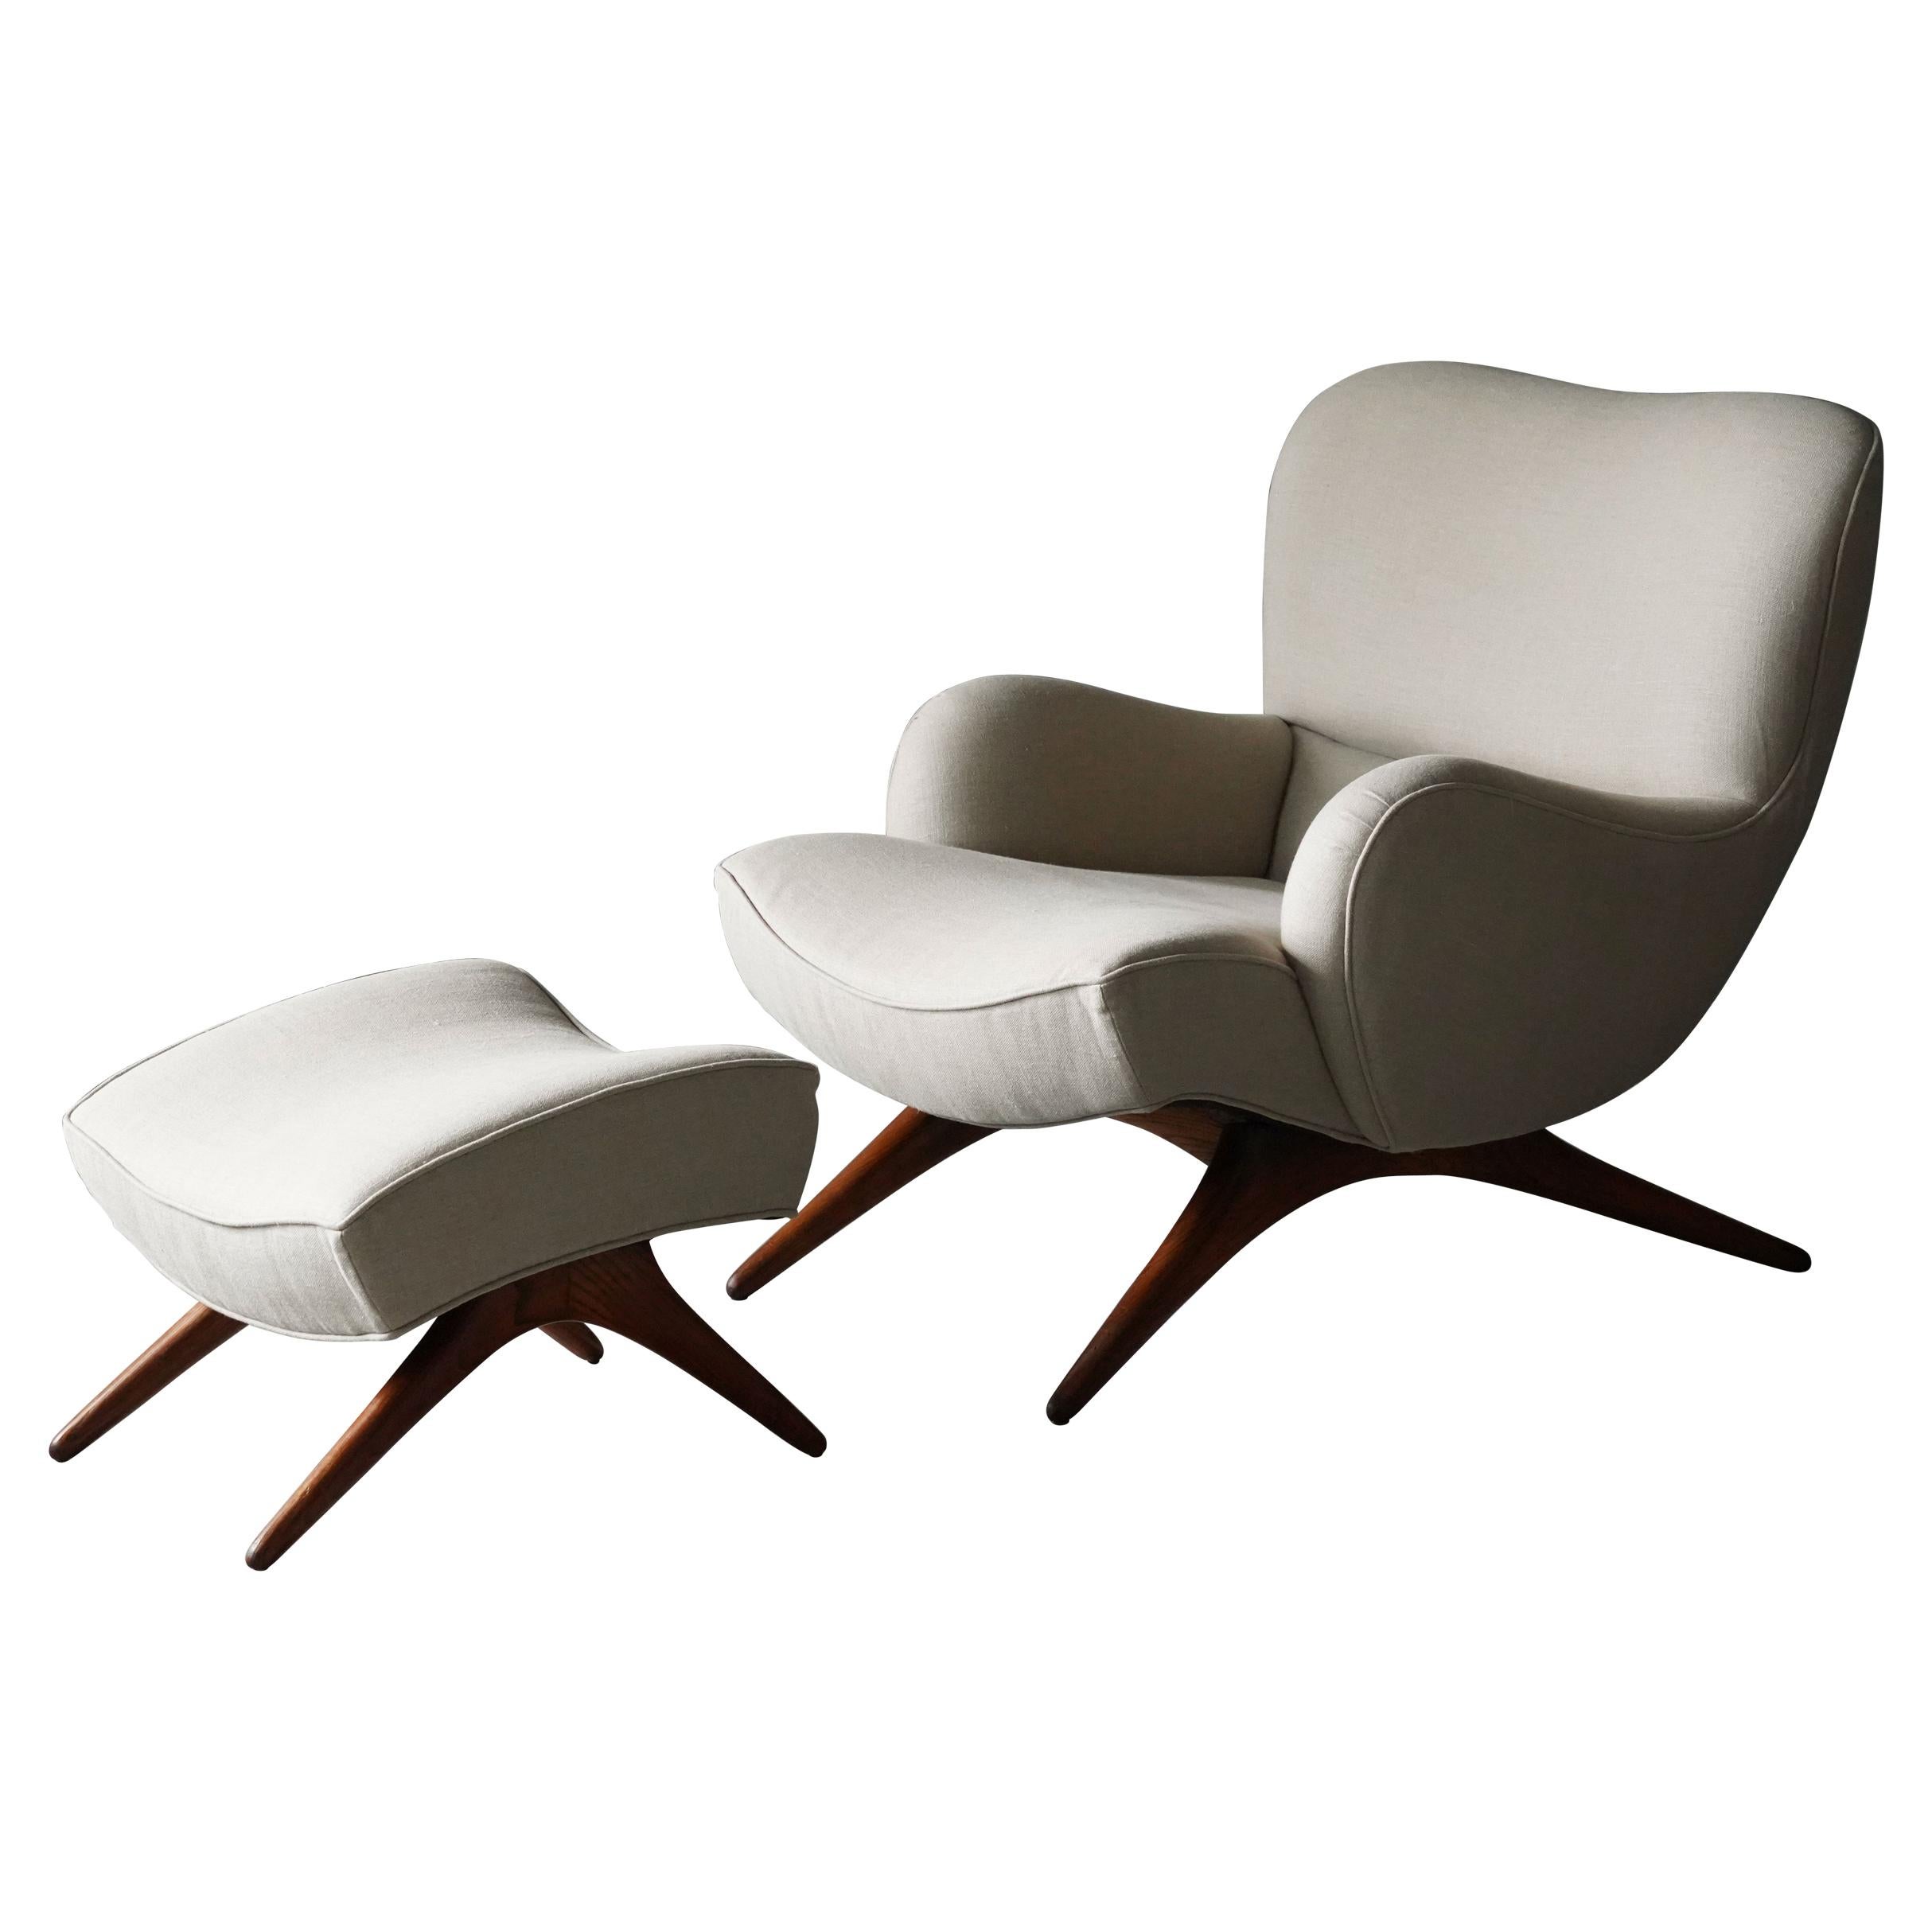 Vladimir Kagan, Rare Lounge Chair, Ash, Fabric, Kagan-Dreyfuss, Inc, c. 1950